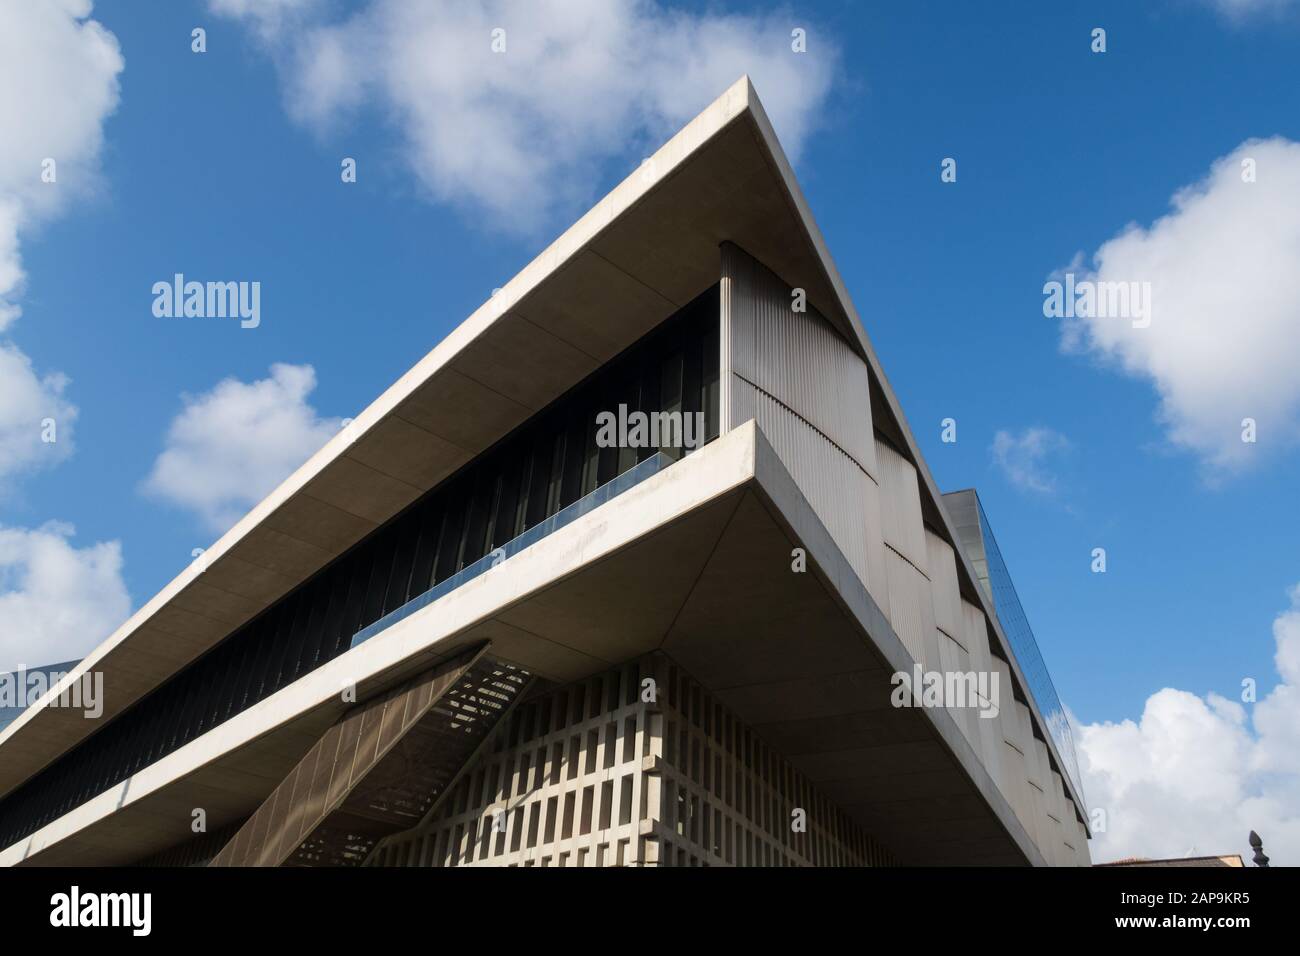 Athen, Griechenland - 20. Dezember 2019: Das neue Akropolis-Museum Athen Griechenland Stockfoto